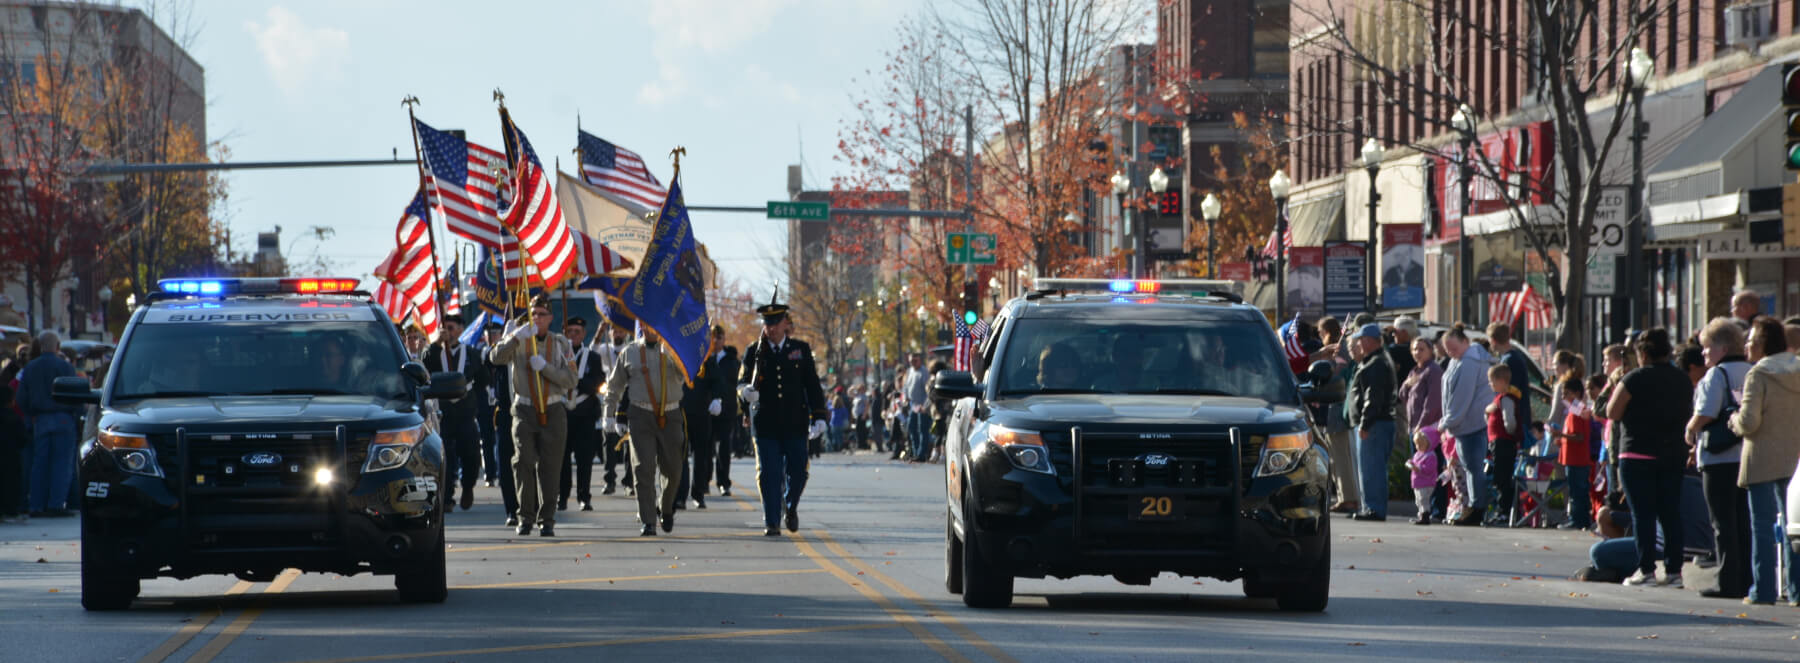 Founding City of Veterans Day Hosts Parade Visit Emporia, Kansas